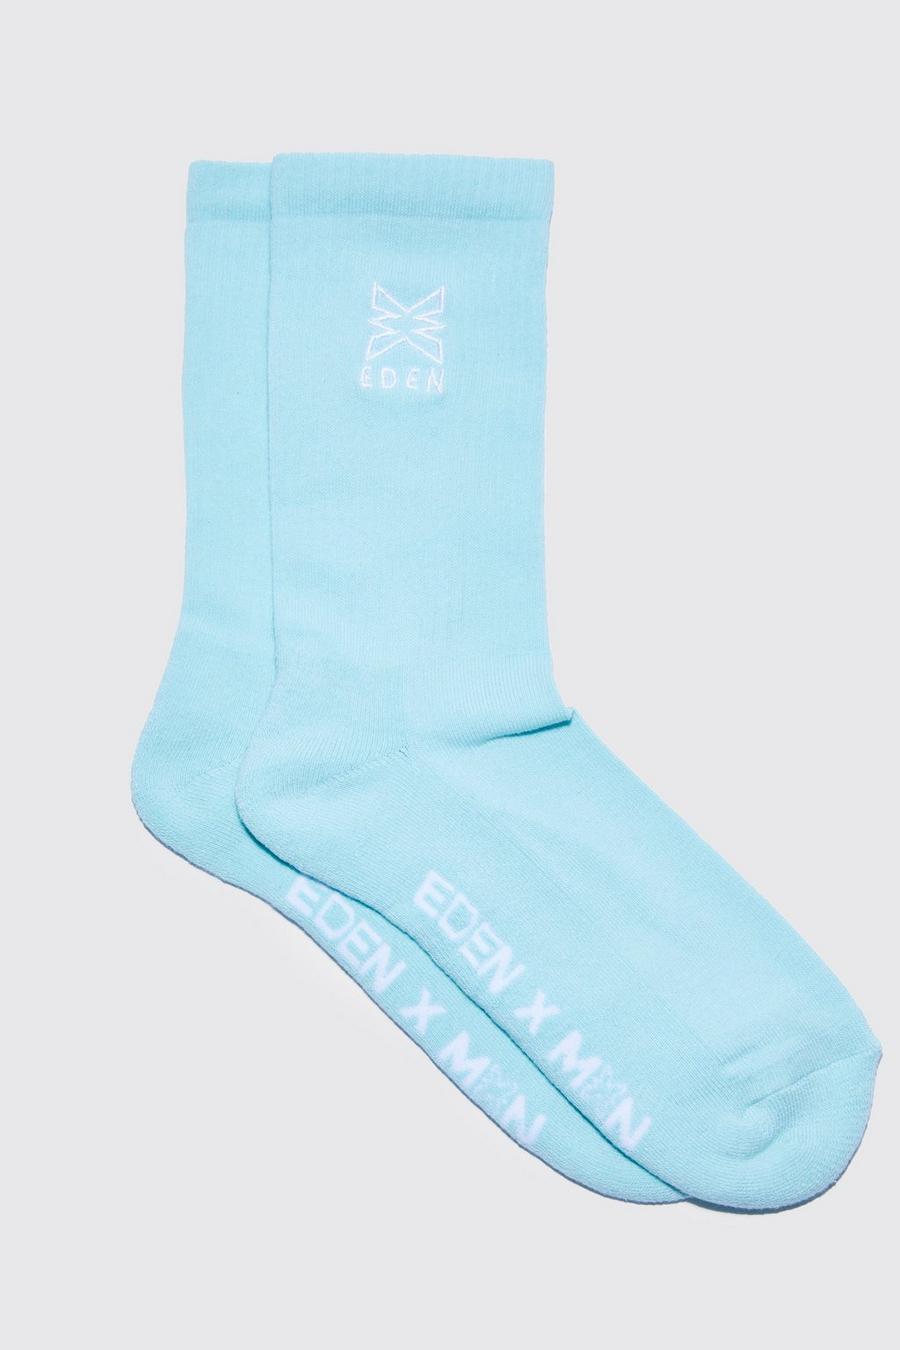 Aqua boohooMAN x EDEN Ibiza Embroidered Socks image number 1